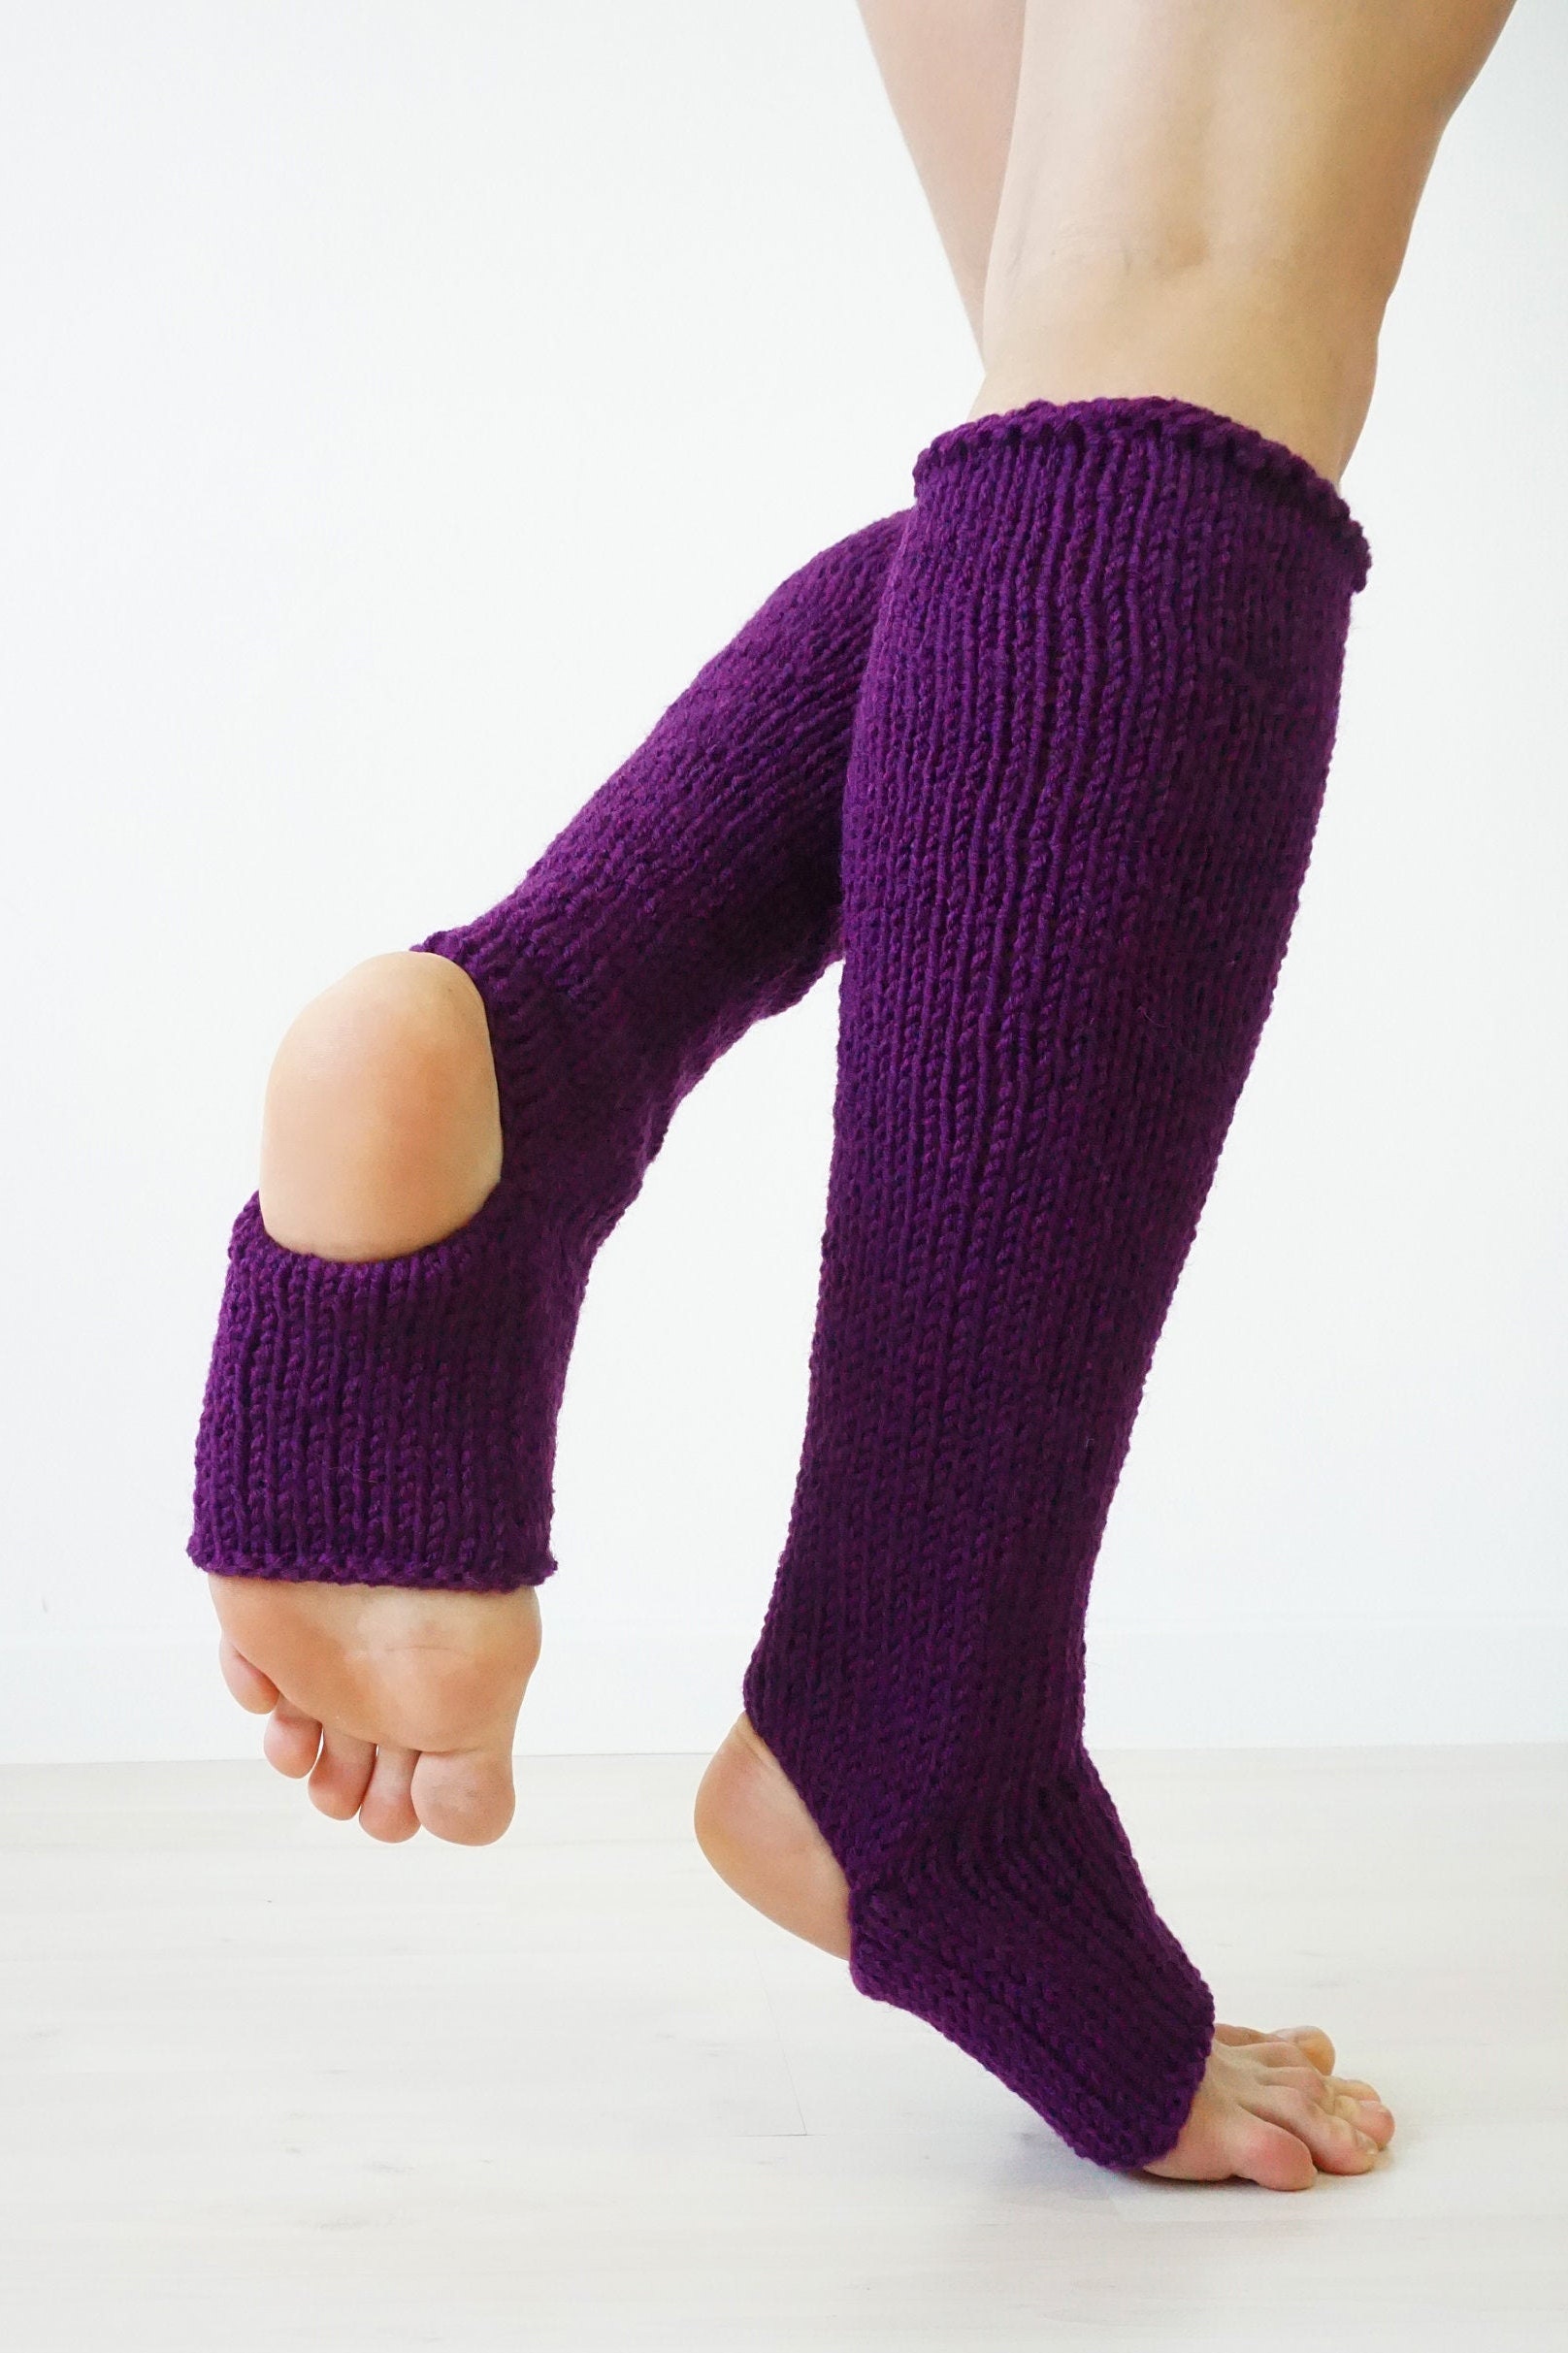 Socks & Leg Warmers for Yoga, Pilates & Barre - YogaHabits